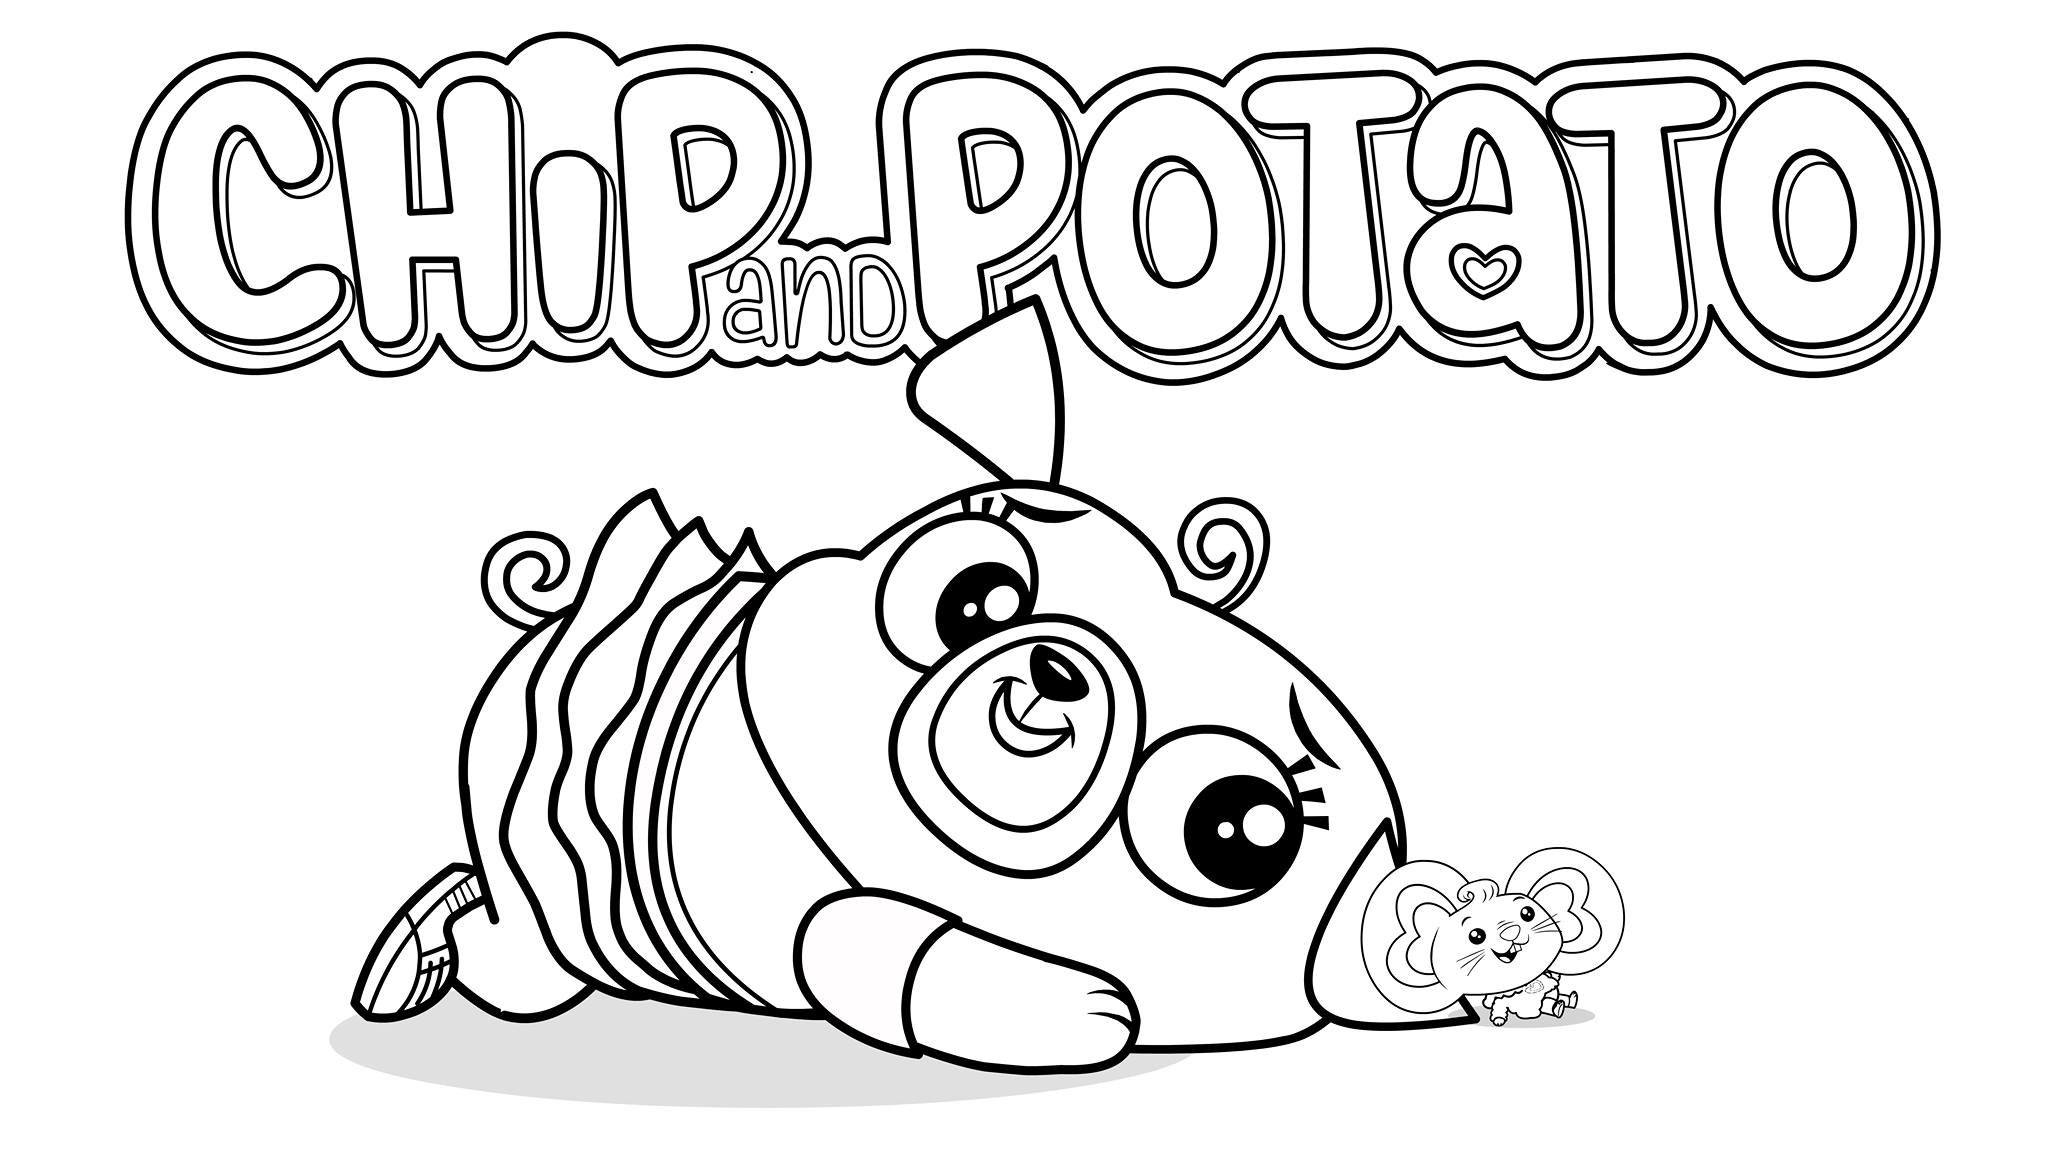 Chip And Potato Coloring Sheet